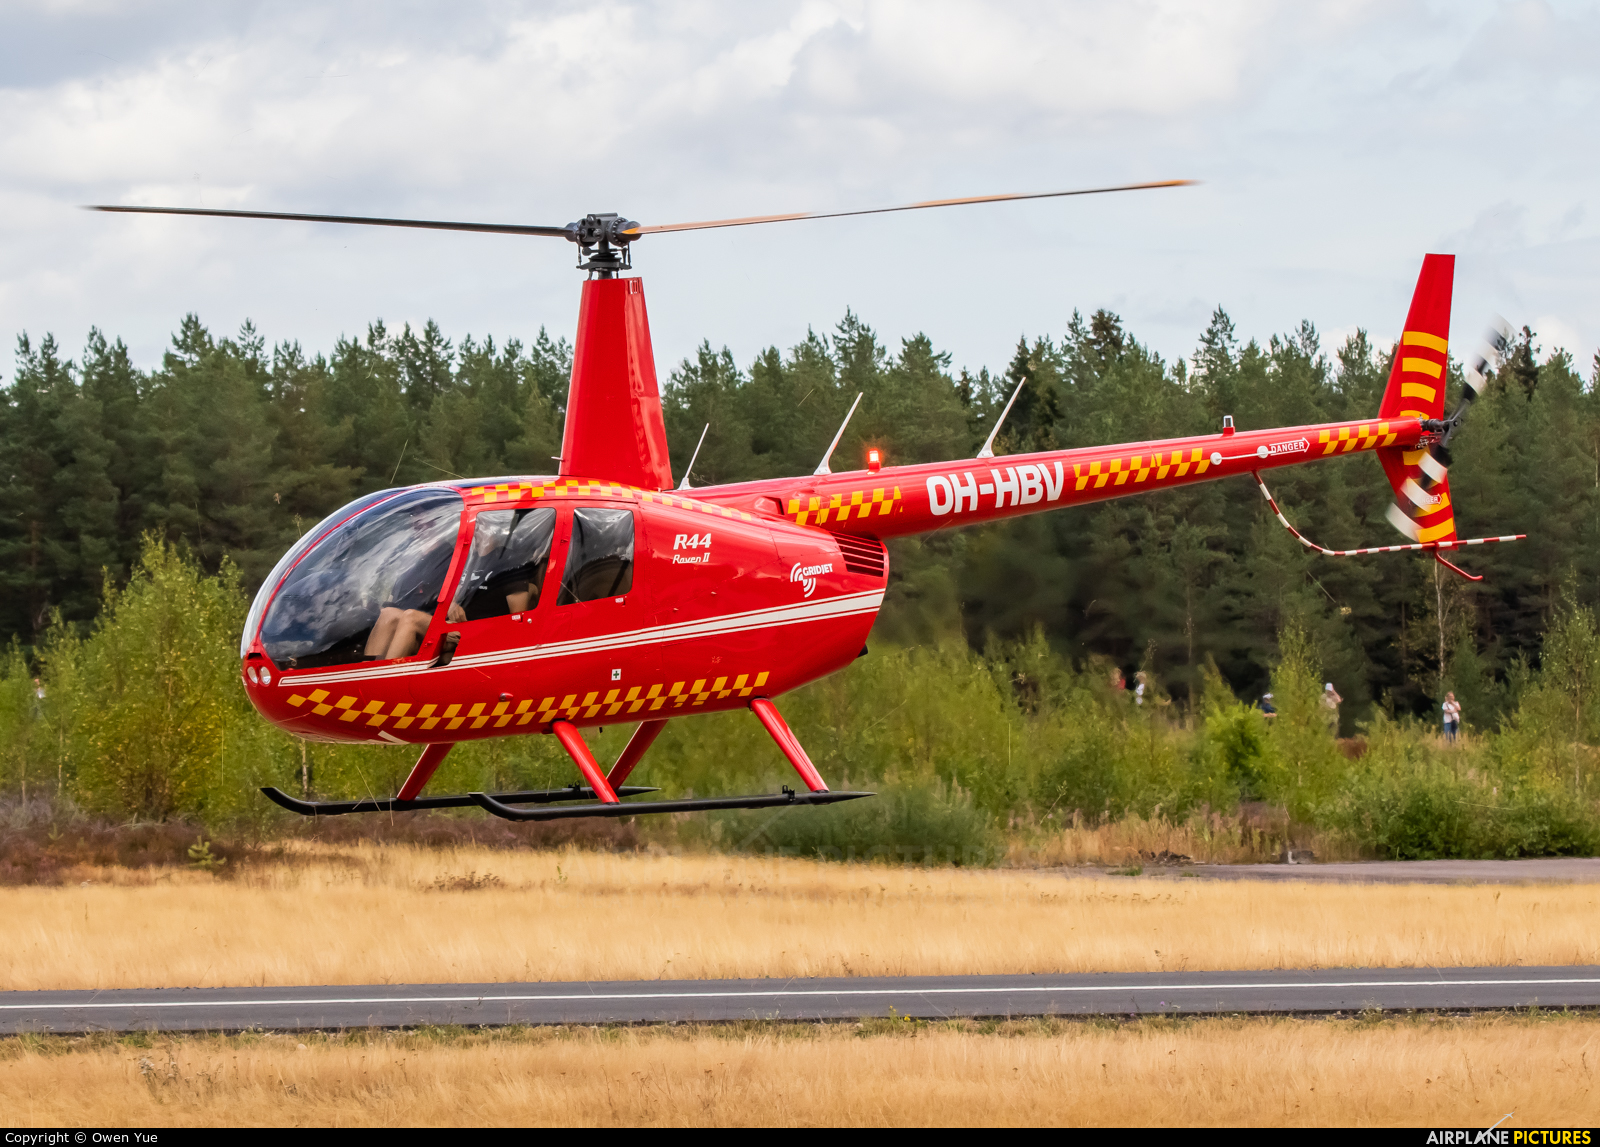 Gridjet Oy OH-HBV aircraft at Nummela